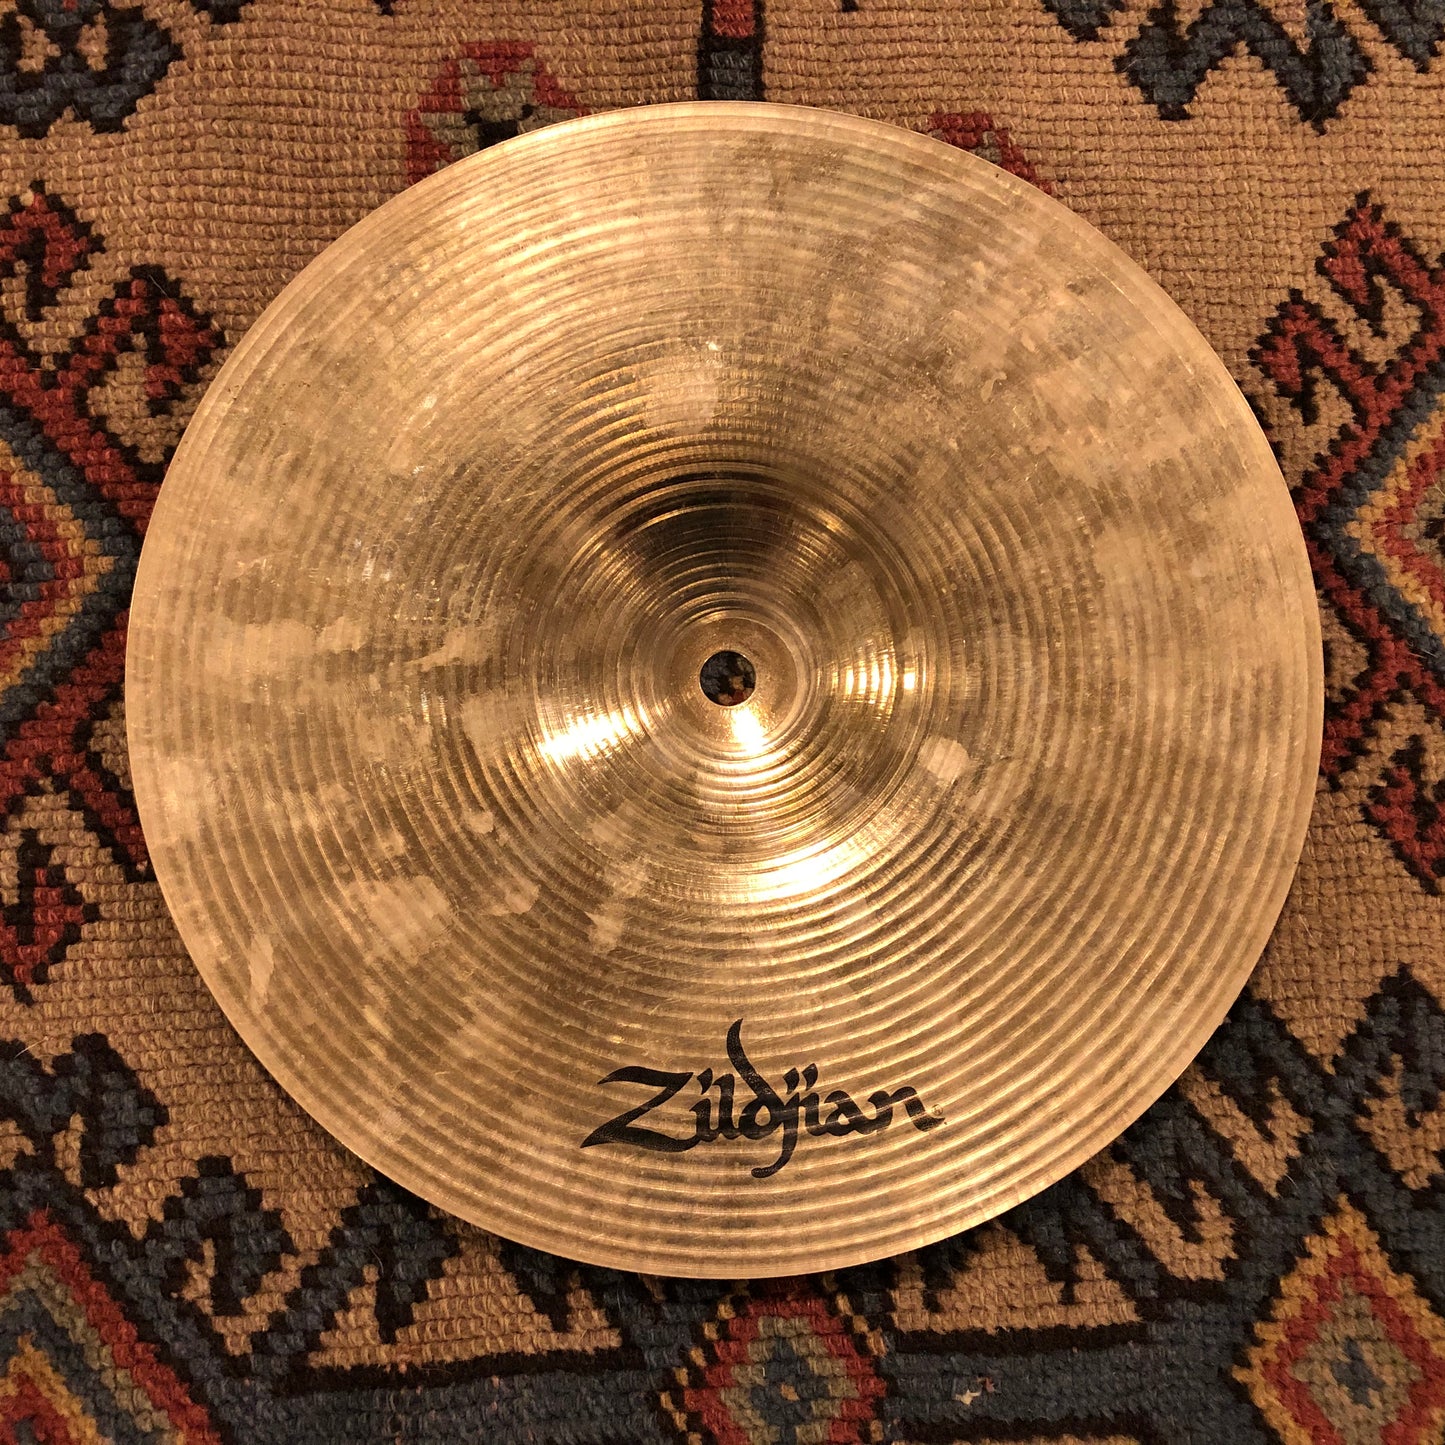 10" Zildjian K Splash Cymbal 256g